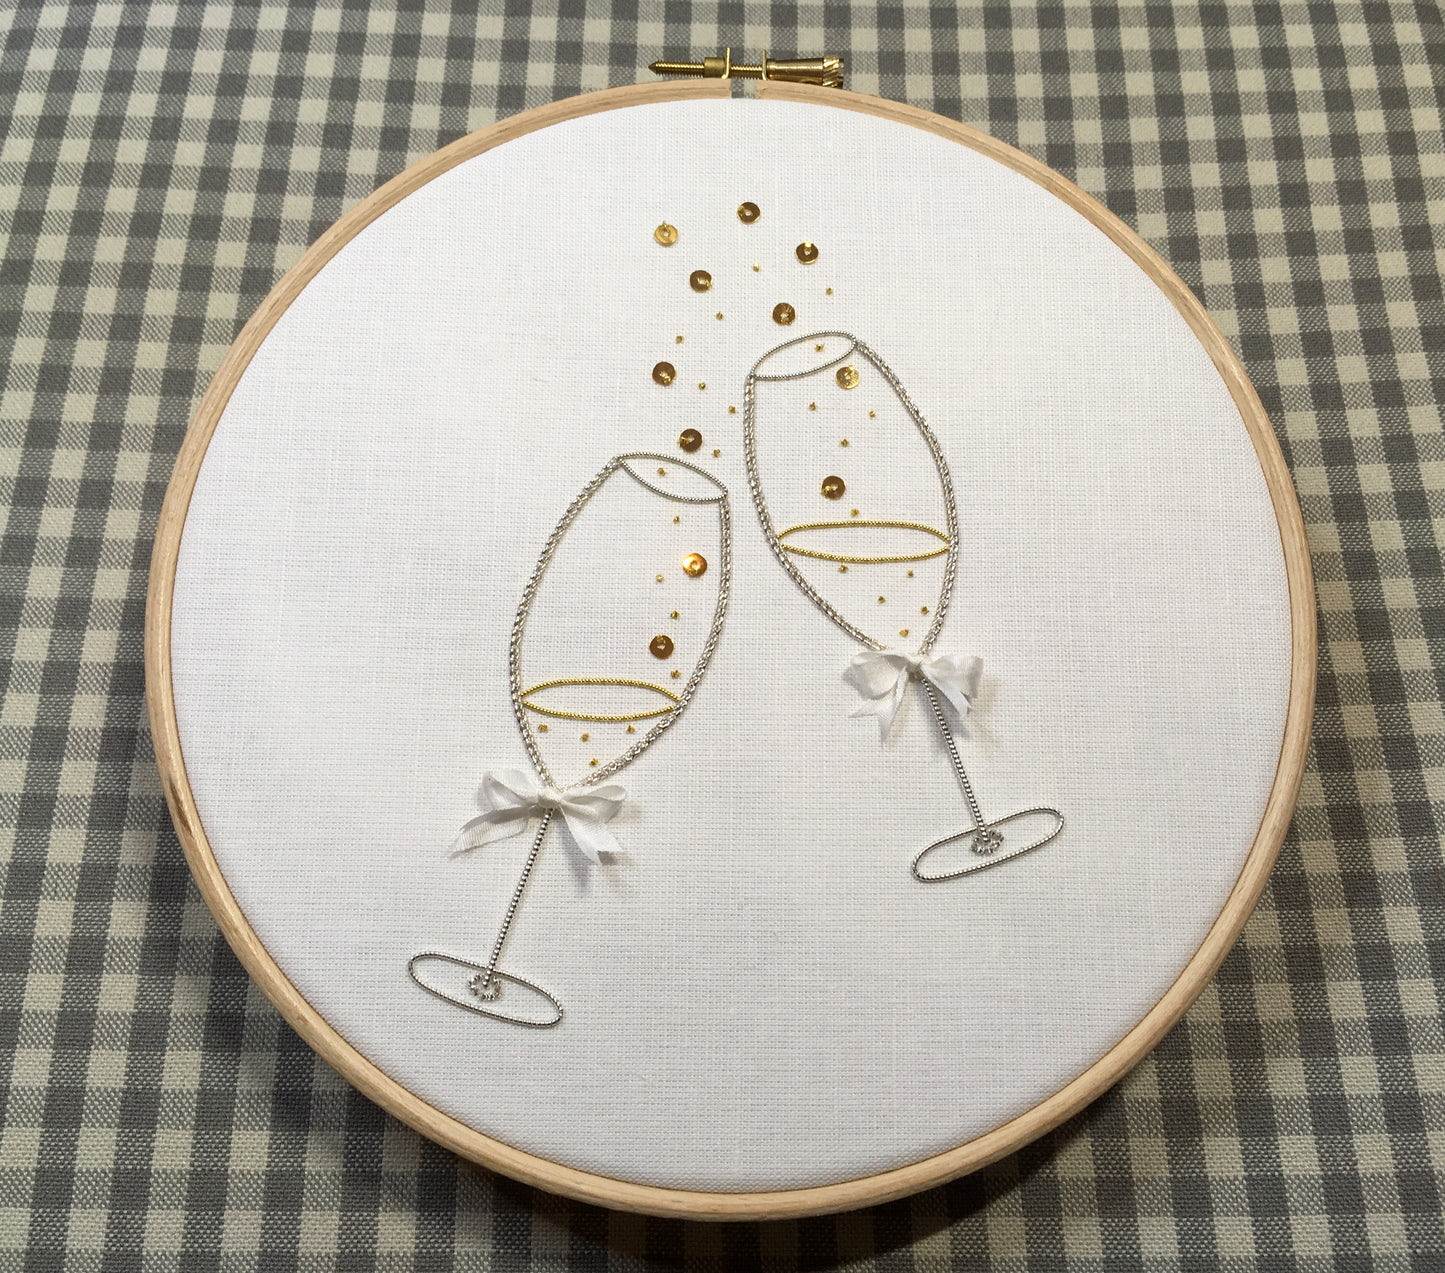 'Raise a Glass' Goldwork Embroidery Kit